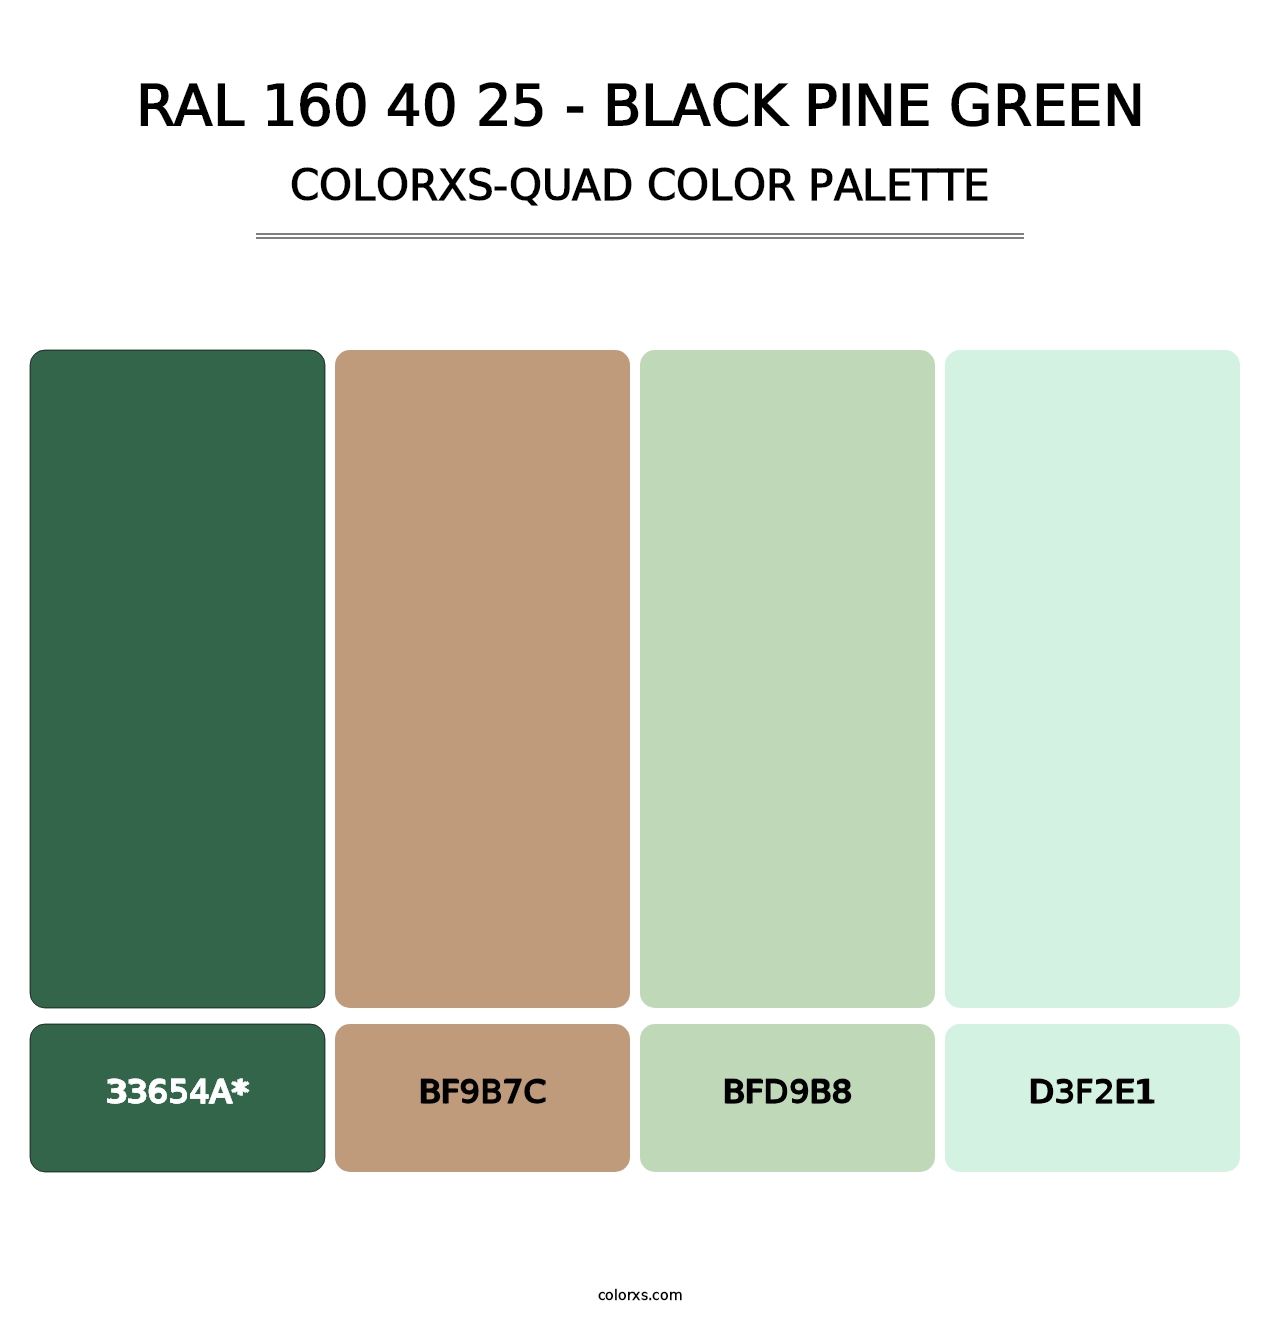 RAL 160 40 25 - Black Pine Green - Colorxs Quad Palette